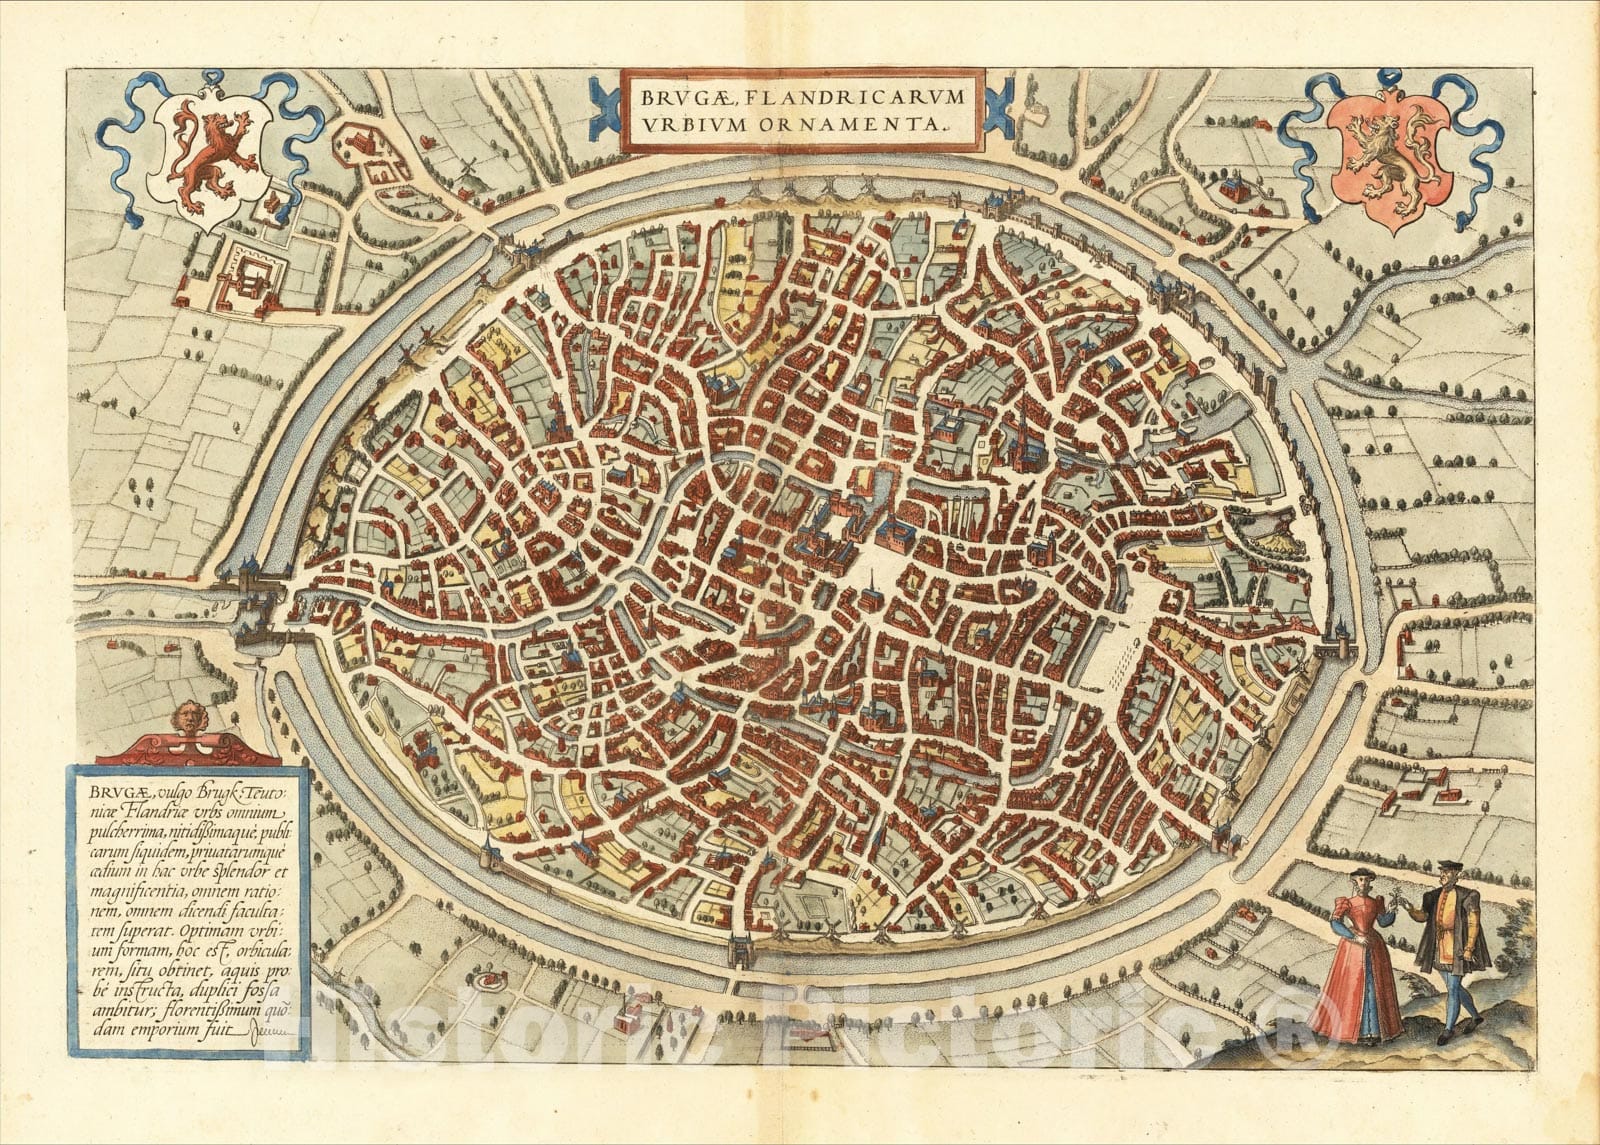 Historic Map : [Brugge] Brugae, Flandricarum Urbium Ornamenta, 1572, Georg Braun, Vintage Wall Art